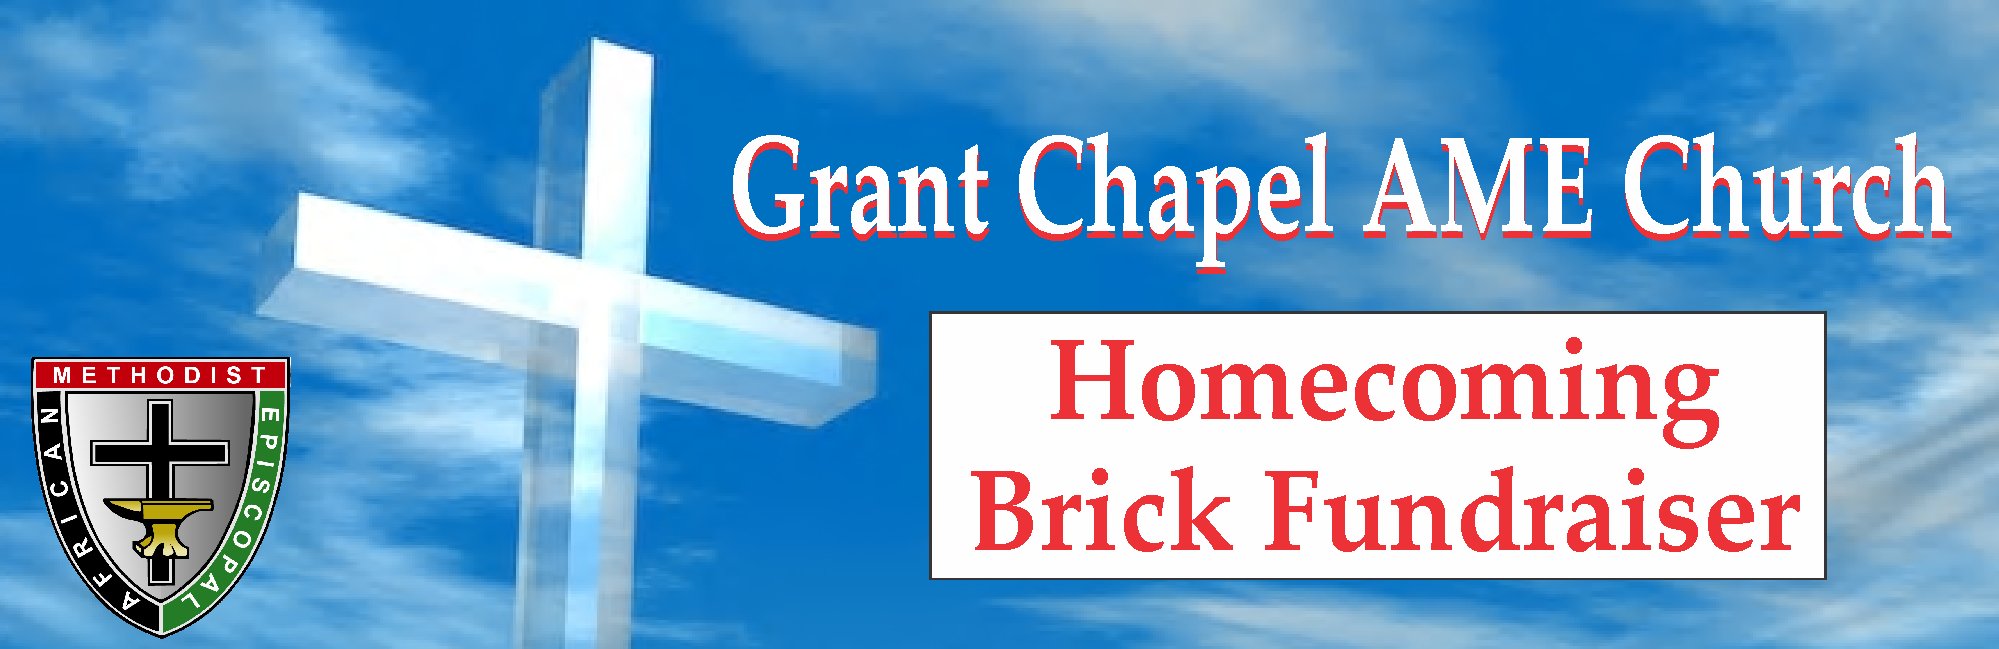 Grant Chapel AME Church Homecoming Brick Fundraiser